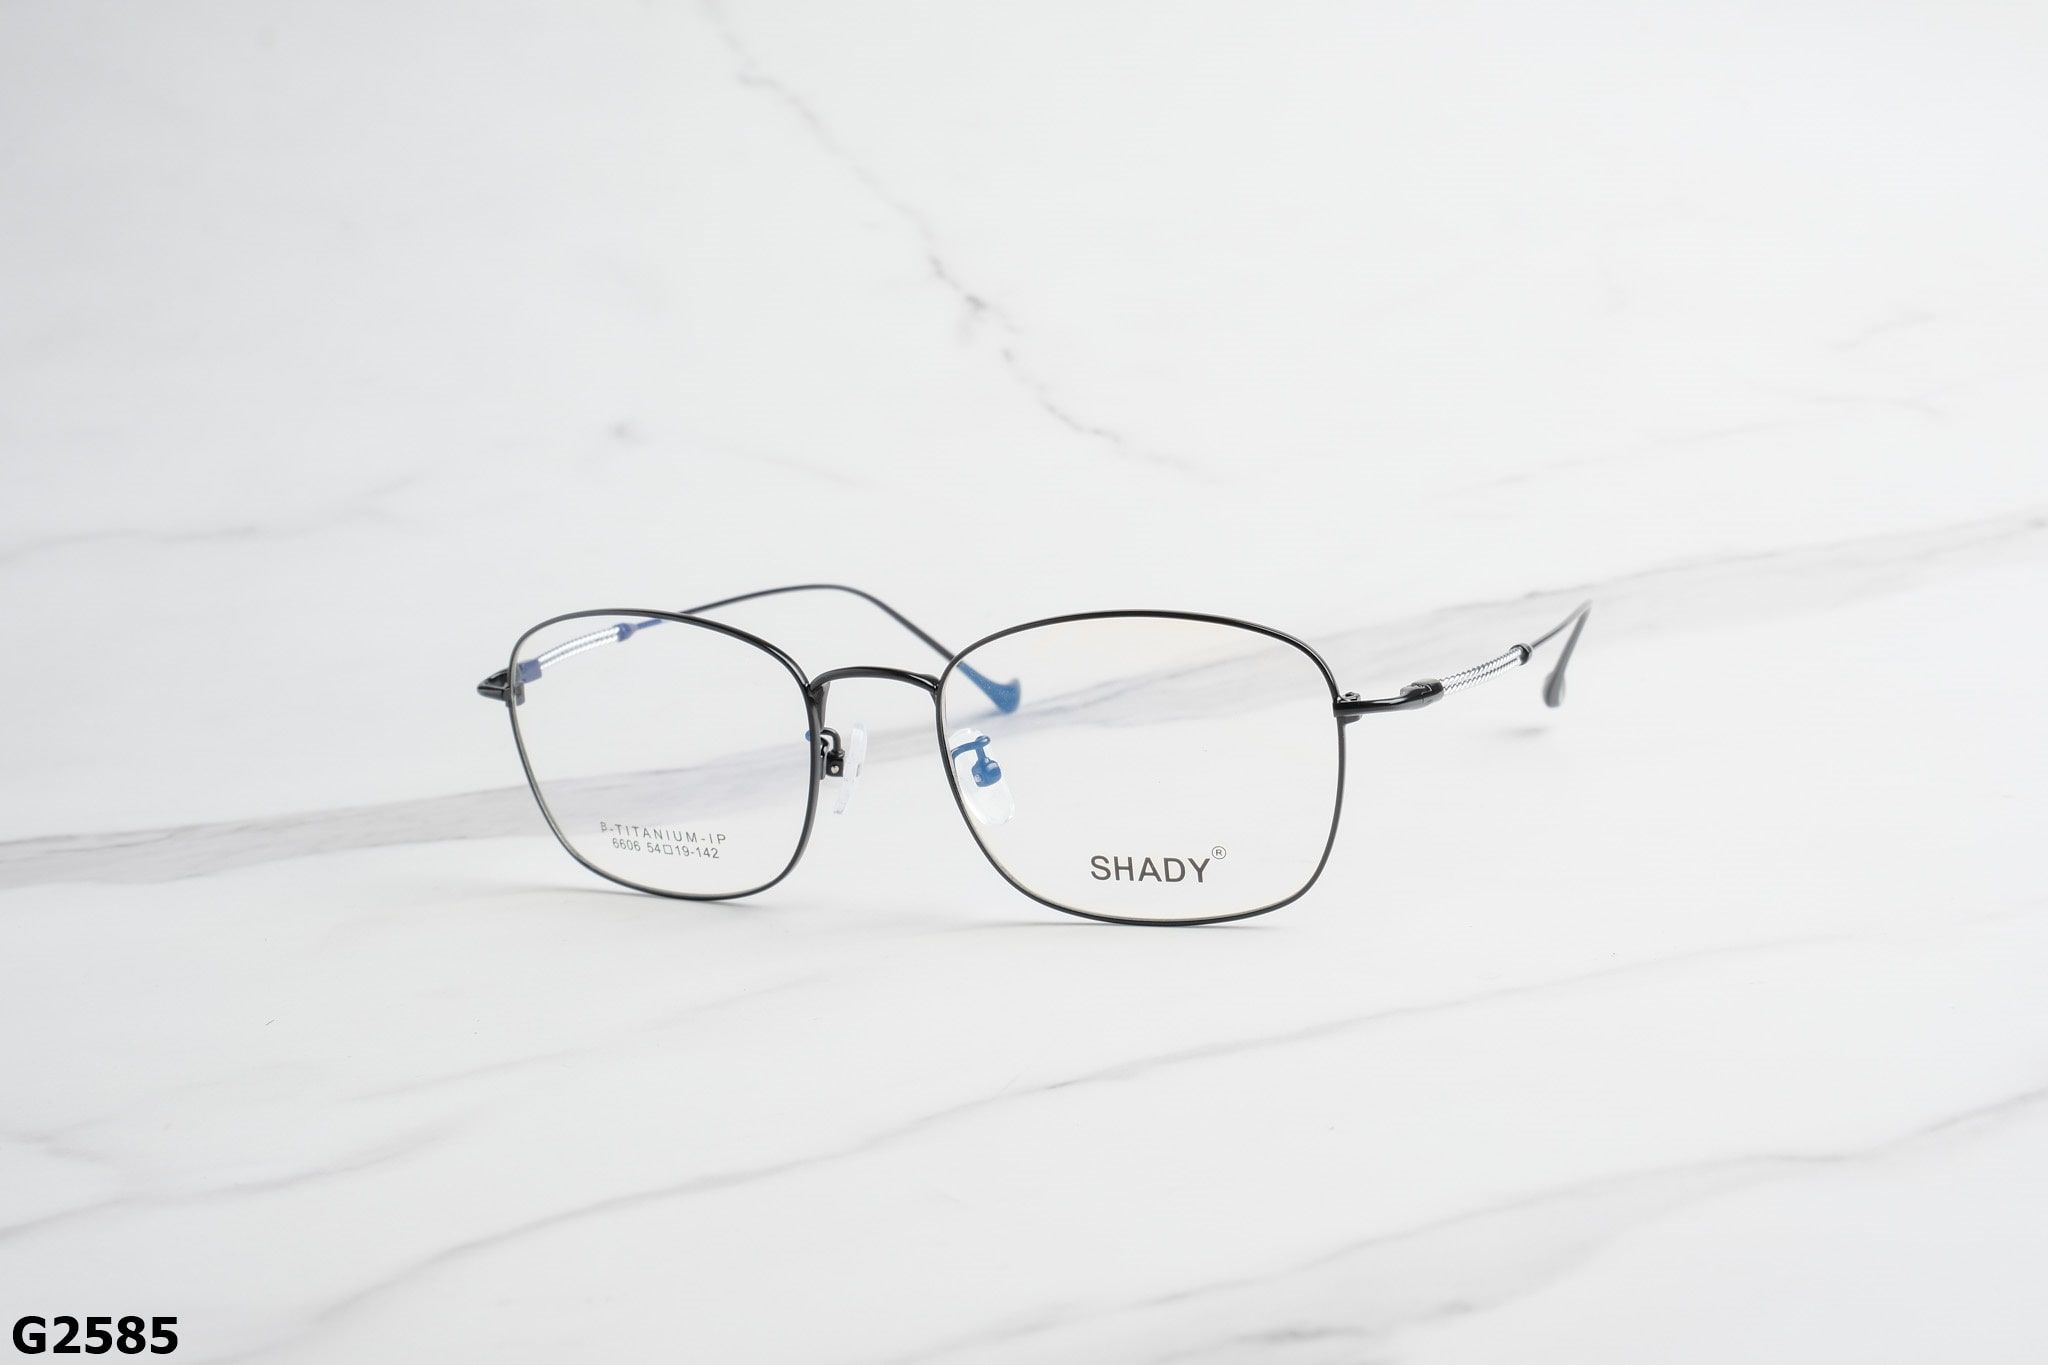  SHADY Eyewear - Glasses - G2585 